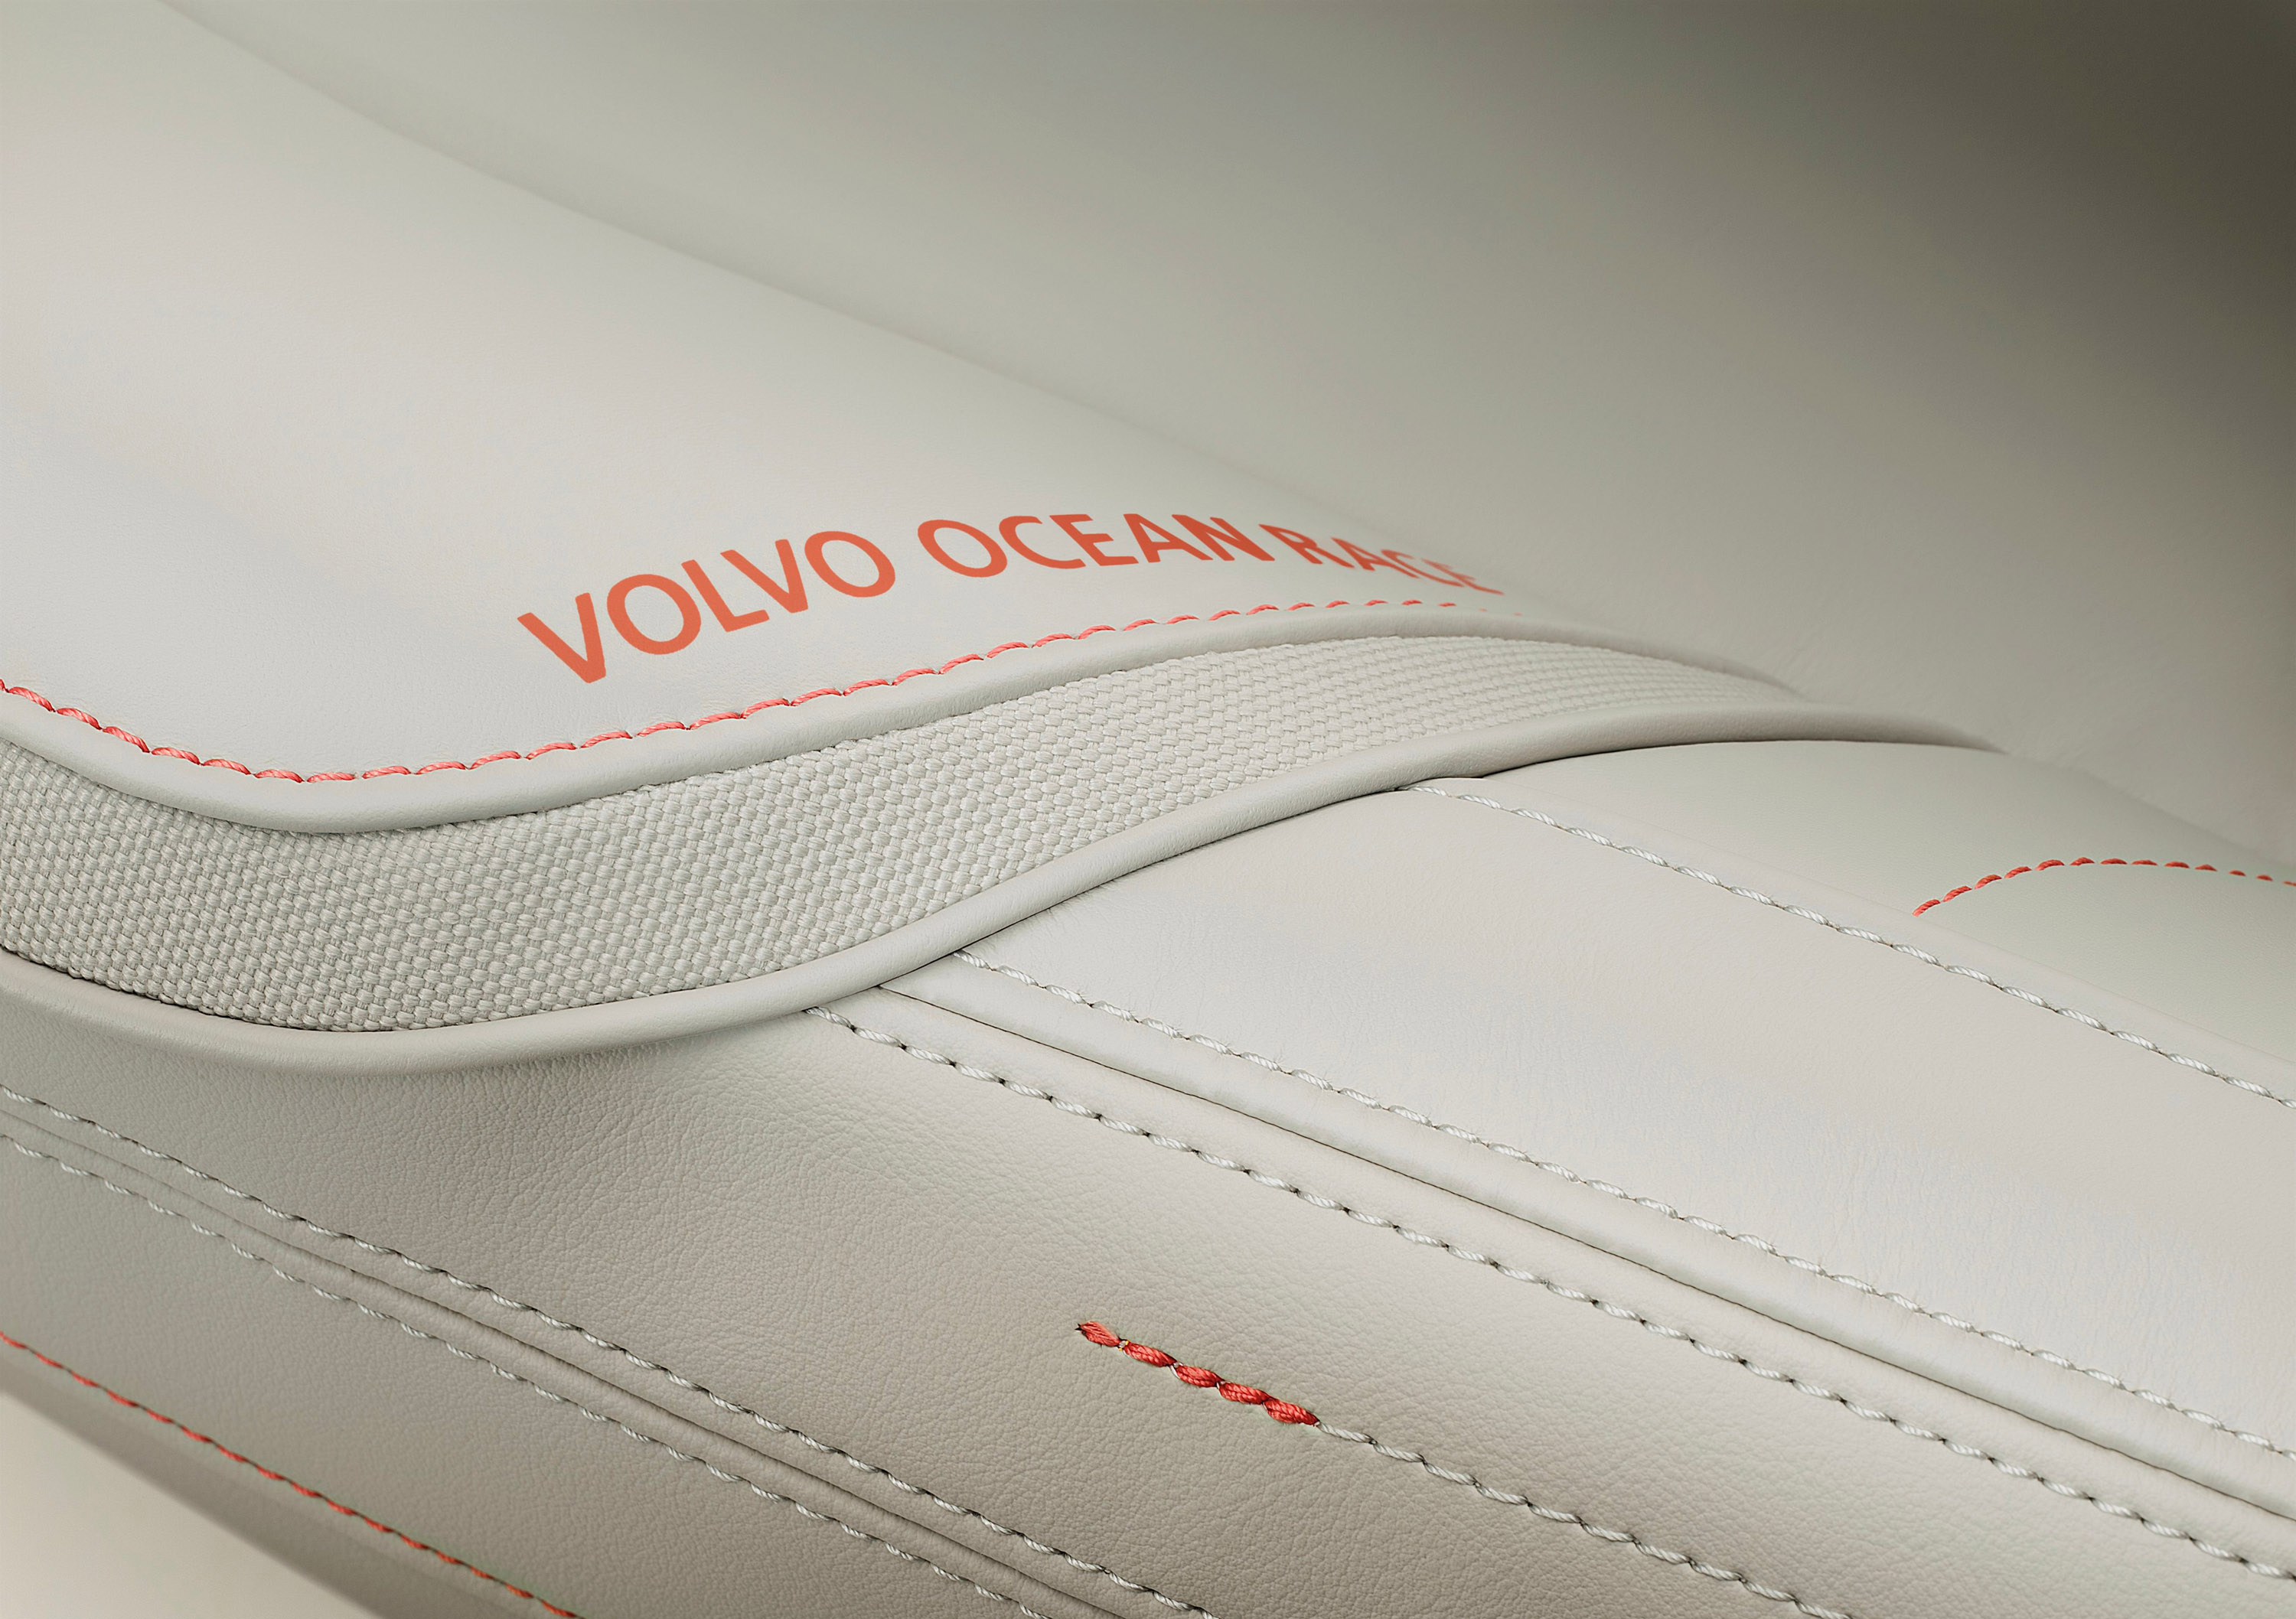 Volvo Ocean Race Editions